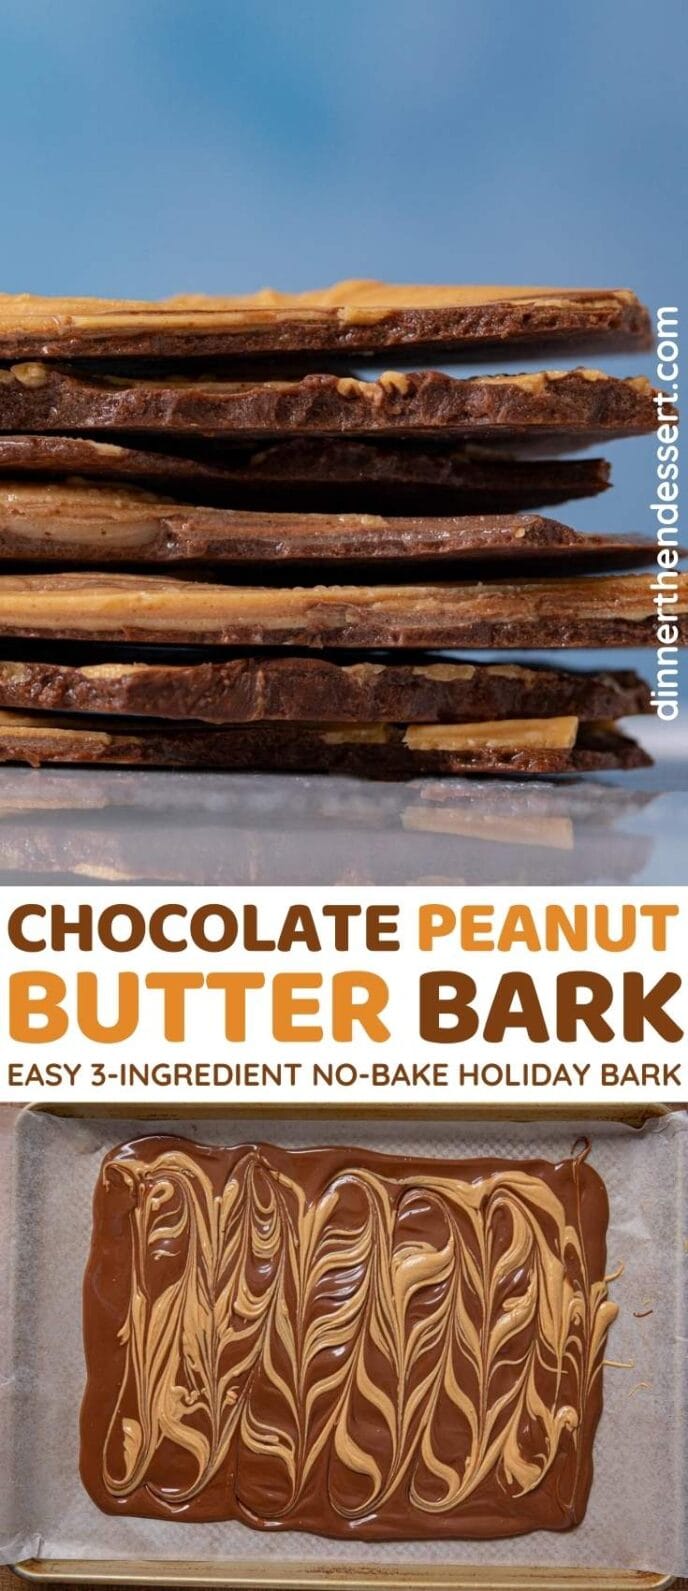 Chocolate Peanut Butter Bark collage